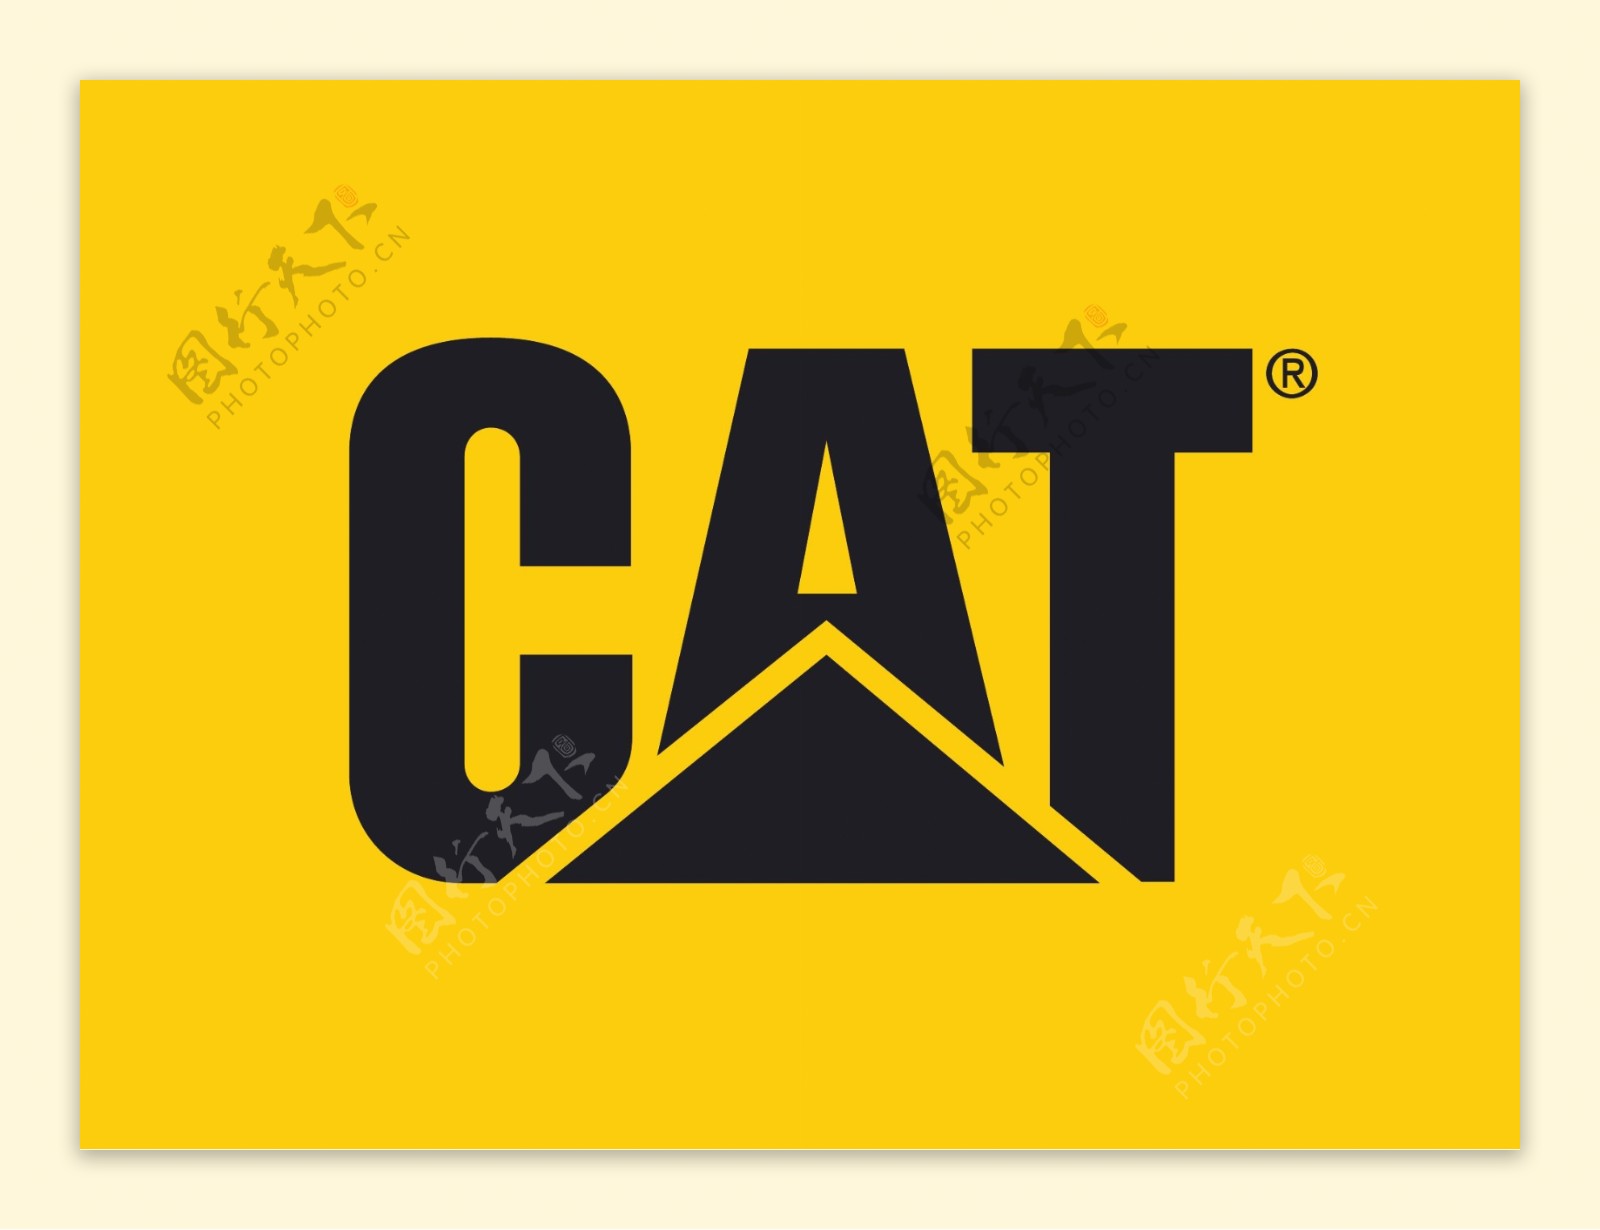 cat卡特logo图片